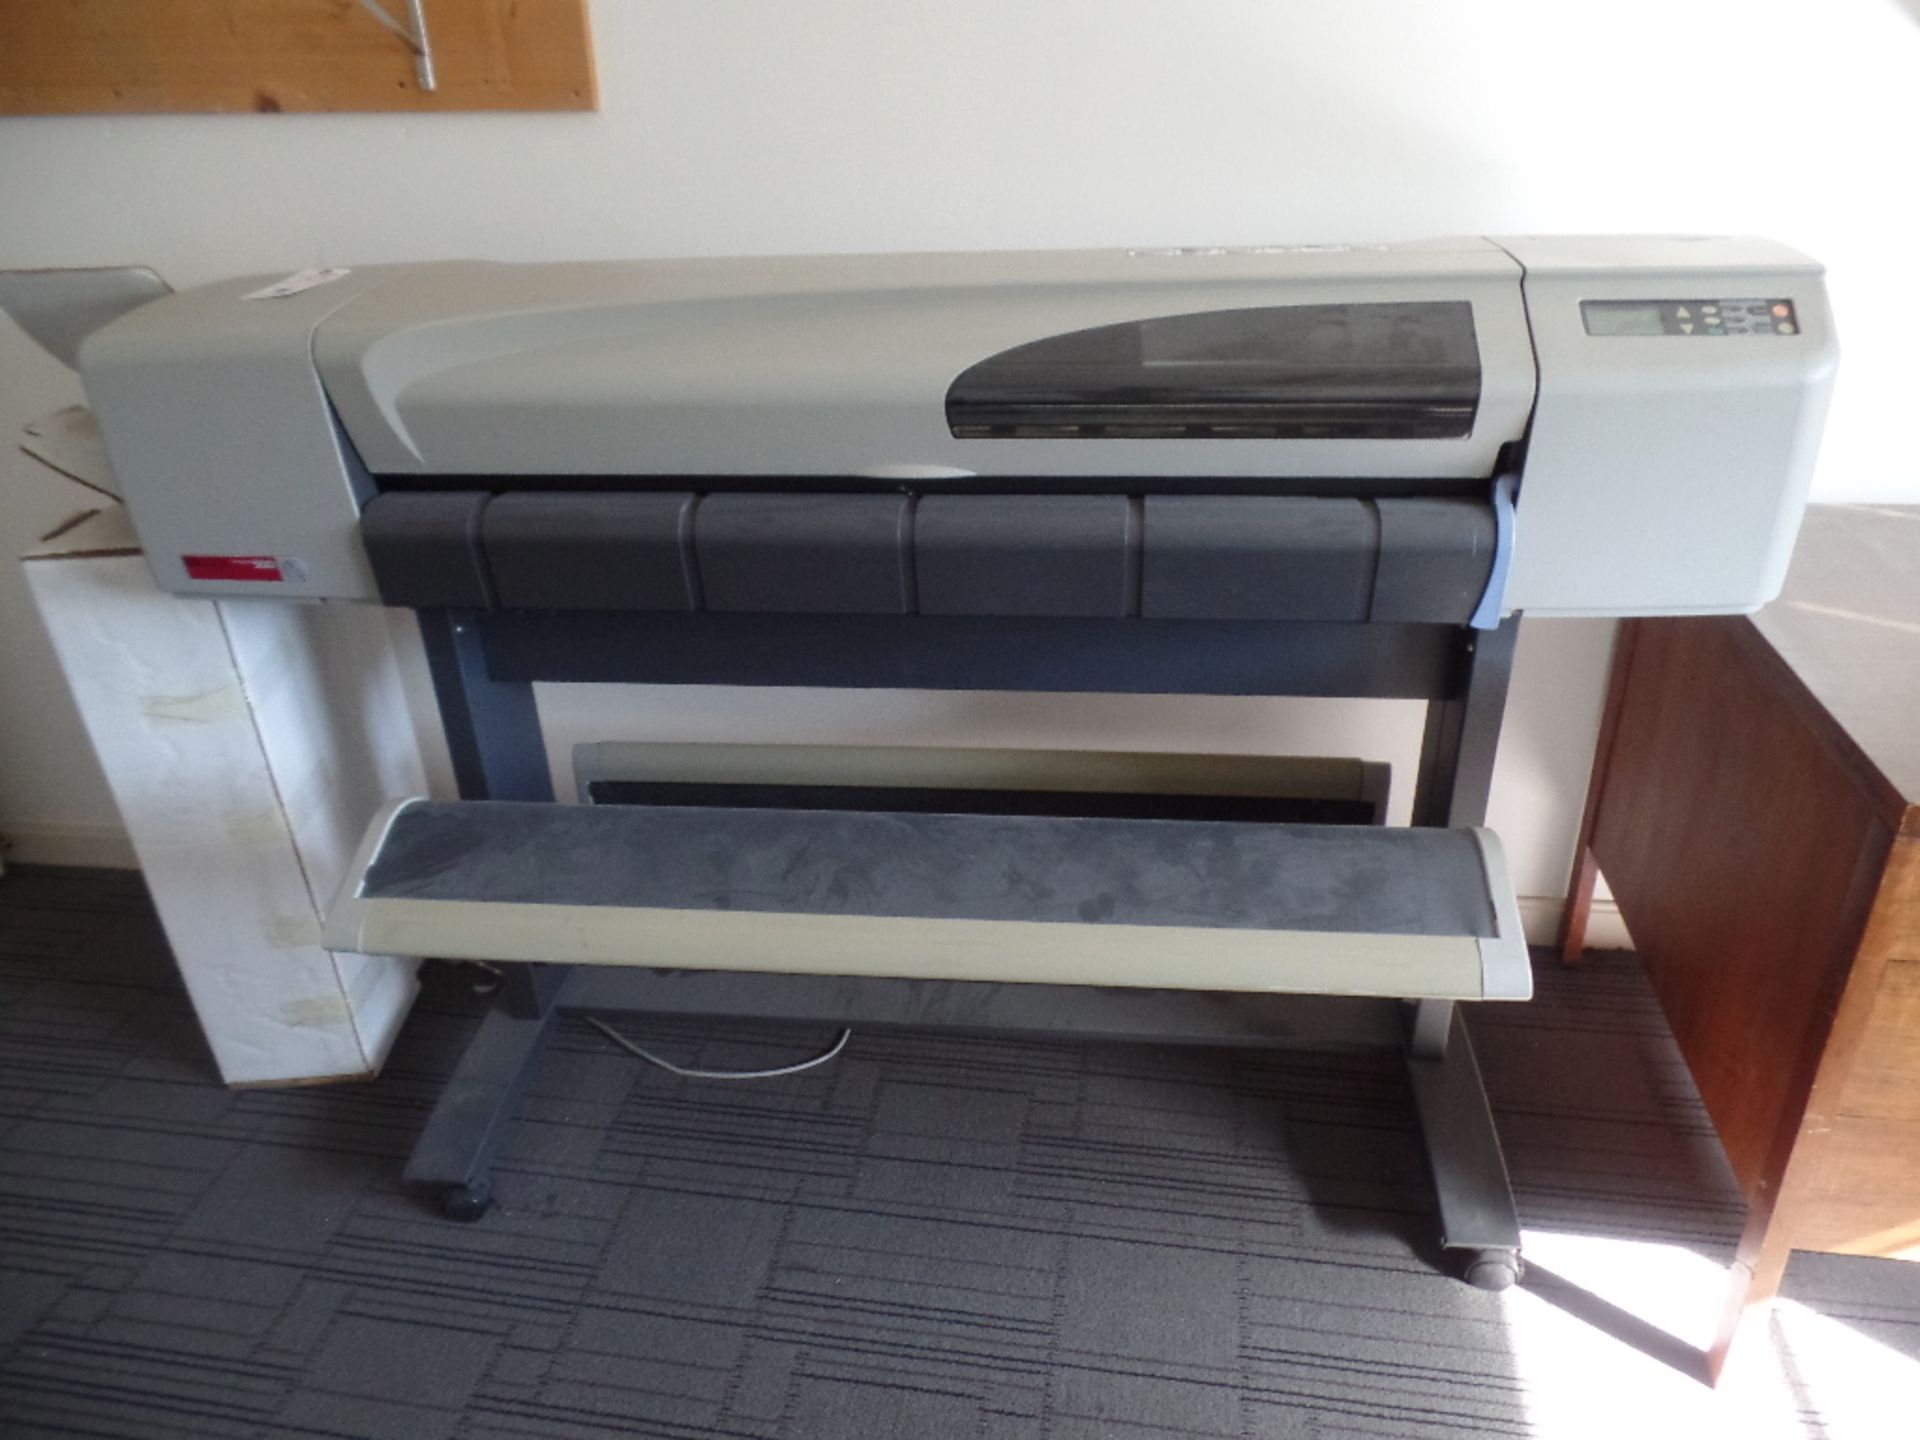 HP Design Jet #500 Large Format Printer